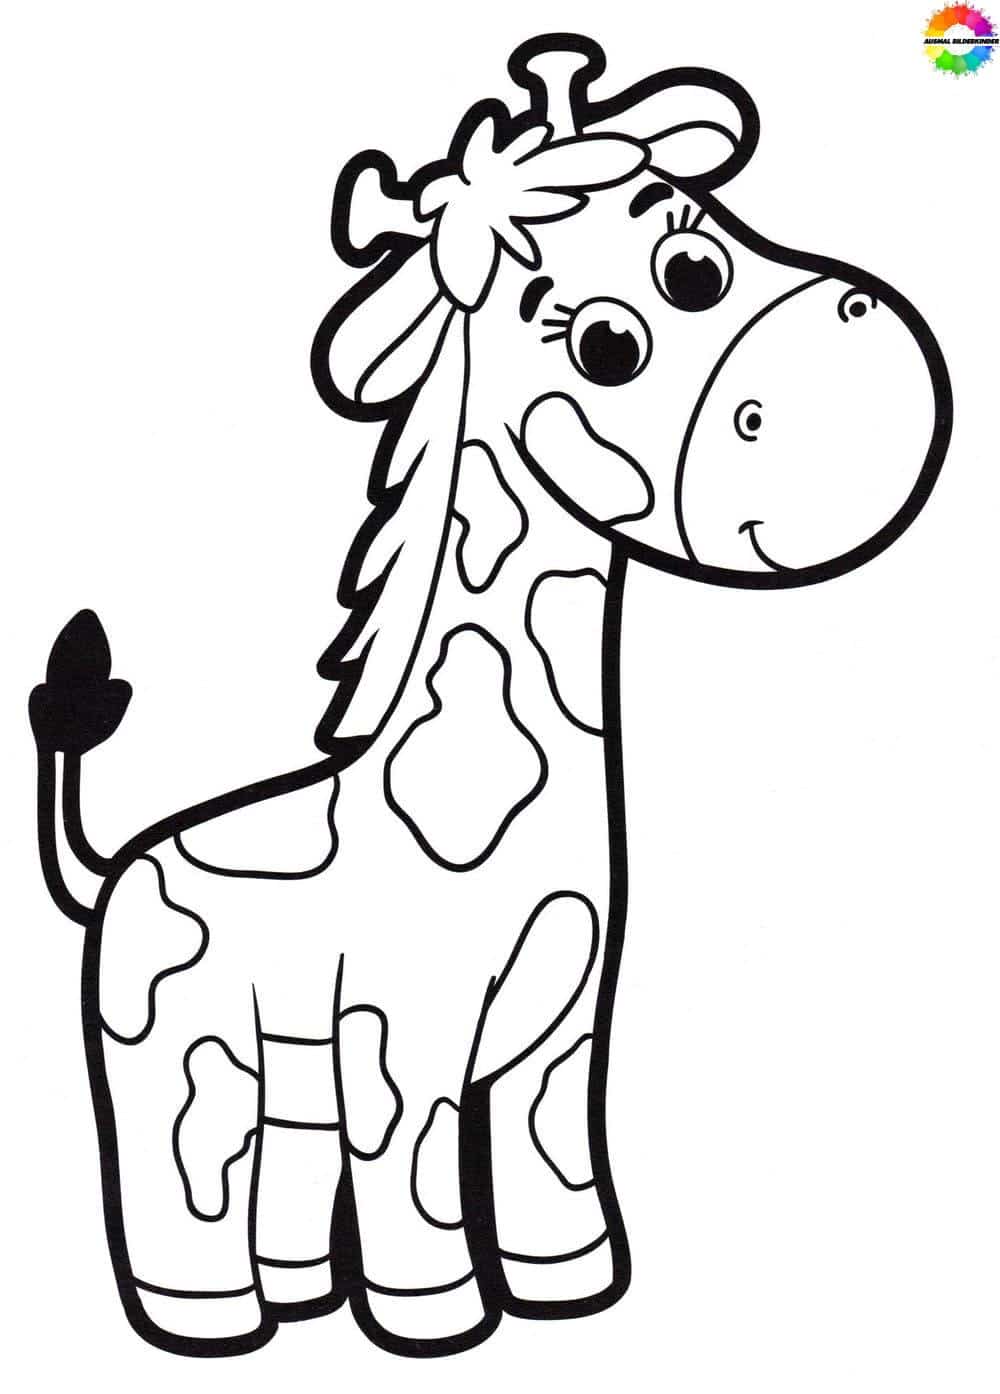 Giraffe-Ausmalbilder-ausmalbilderkinder.de-24